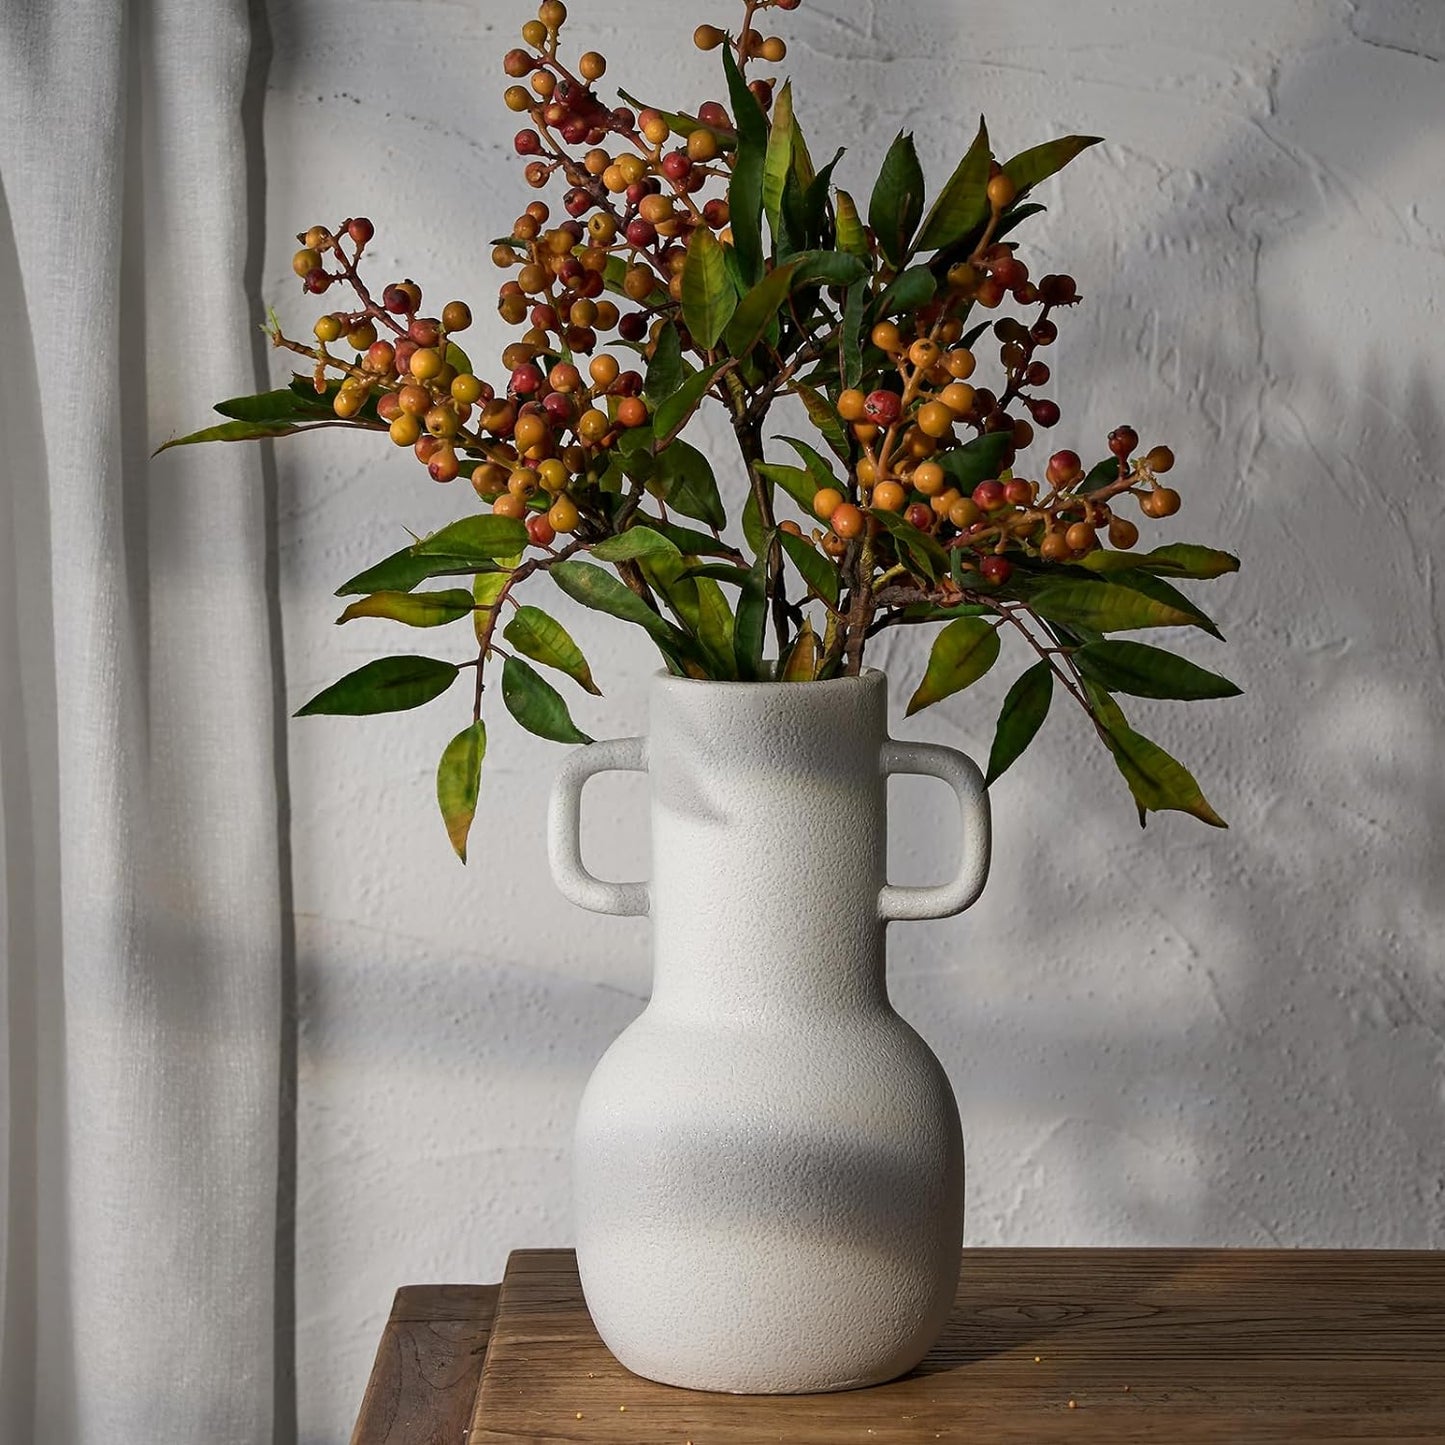 SIDUCAL Rustic Ceramic Farmhouse Flower Vase with 2 Handles, Whitewashed Terra Cotta Vase, Decorative Pottery Flower Vase for Home Decor, Table, Living Room, Shelf Decor, 7.3 Inch, Terra